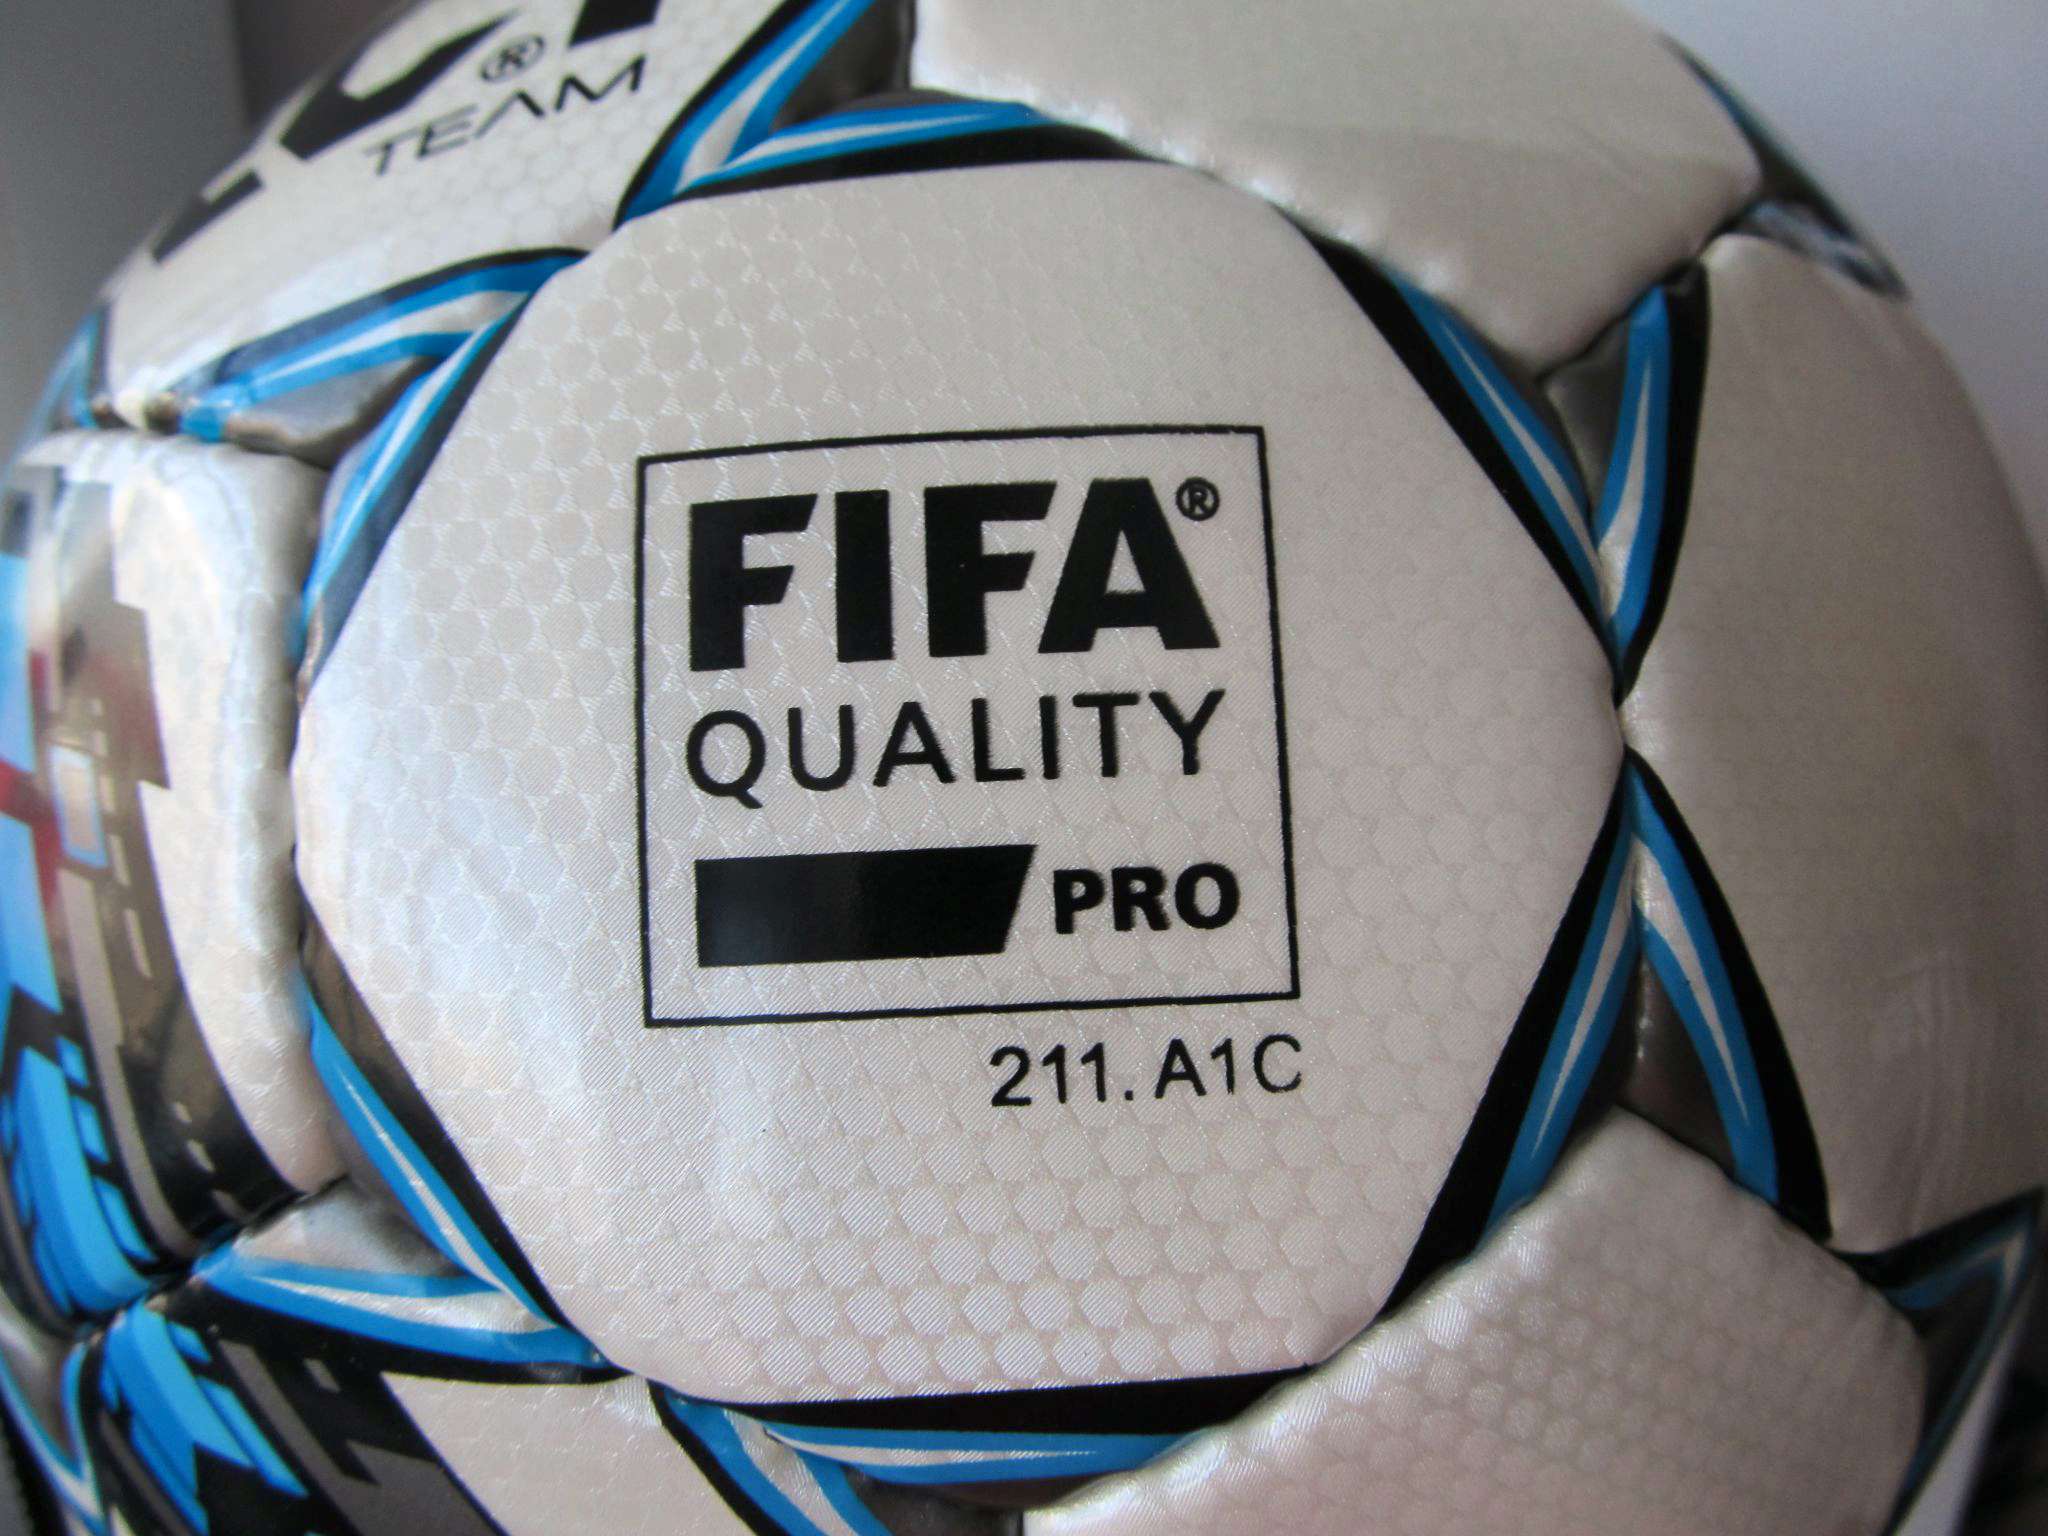 Pro fifa. Мяч футбольный select Team FIFA approved размер 5. Мяч Селект FIFA quality 211.a.1.a. Мяч футбольный select Match IMS. Футбольный мяч select Team FIFA approved 3739.